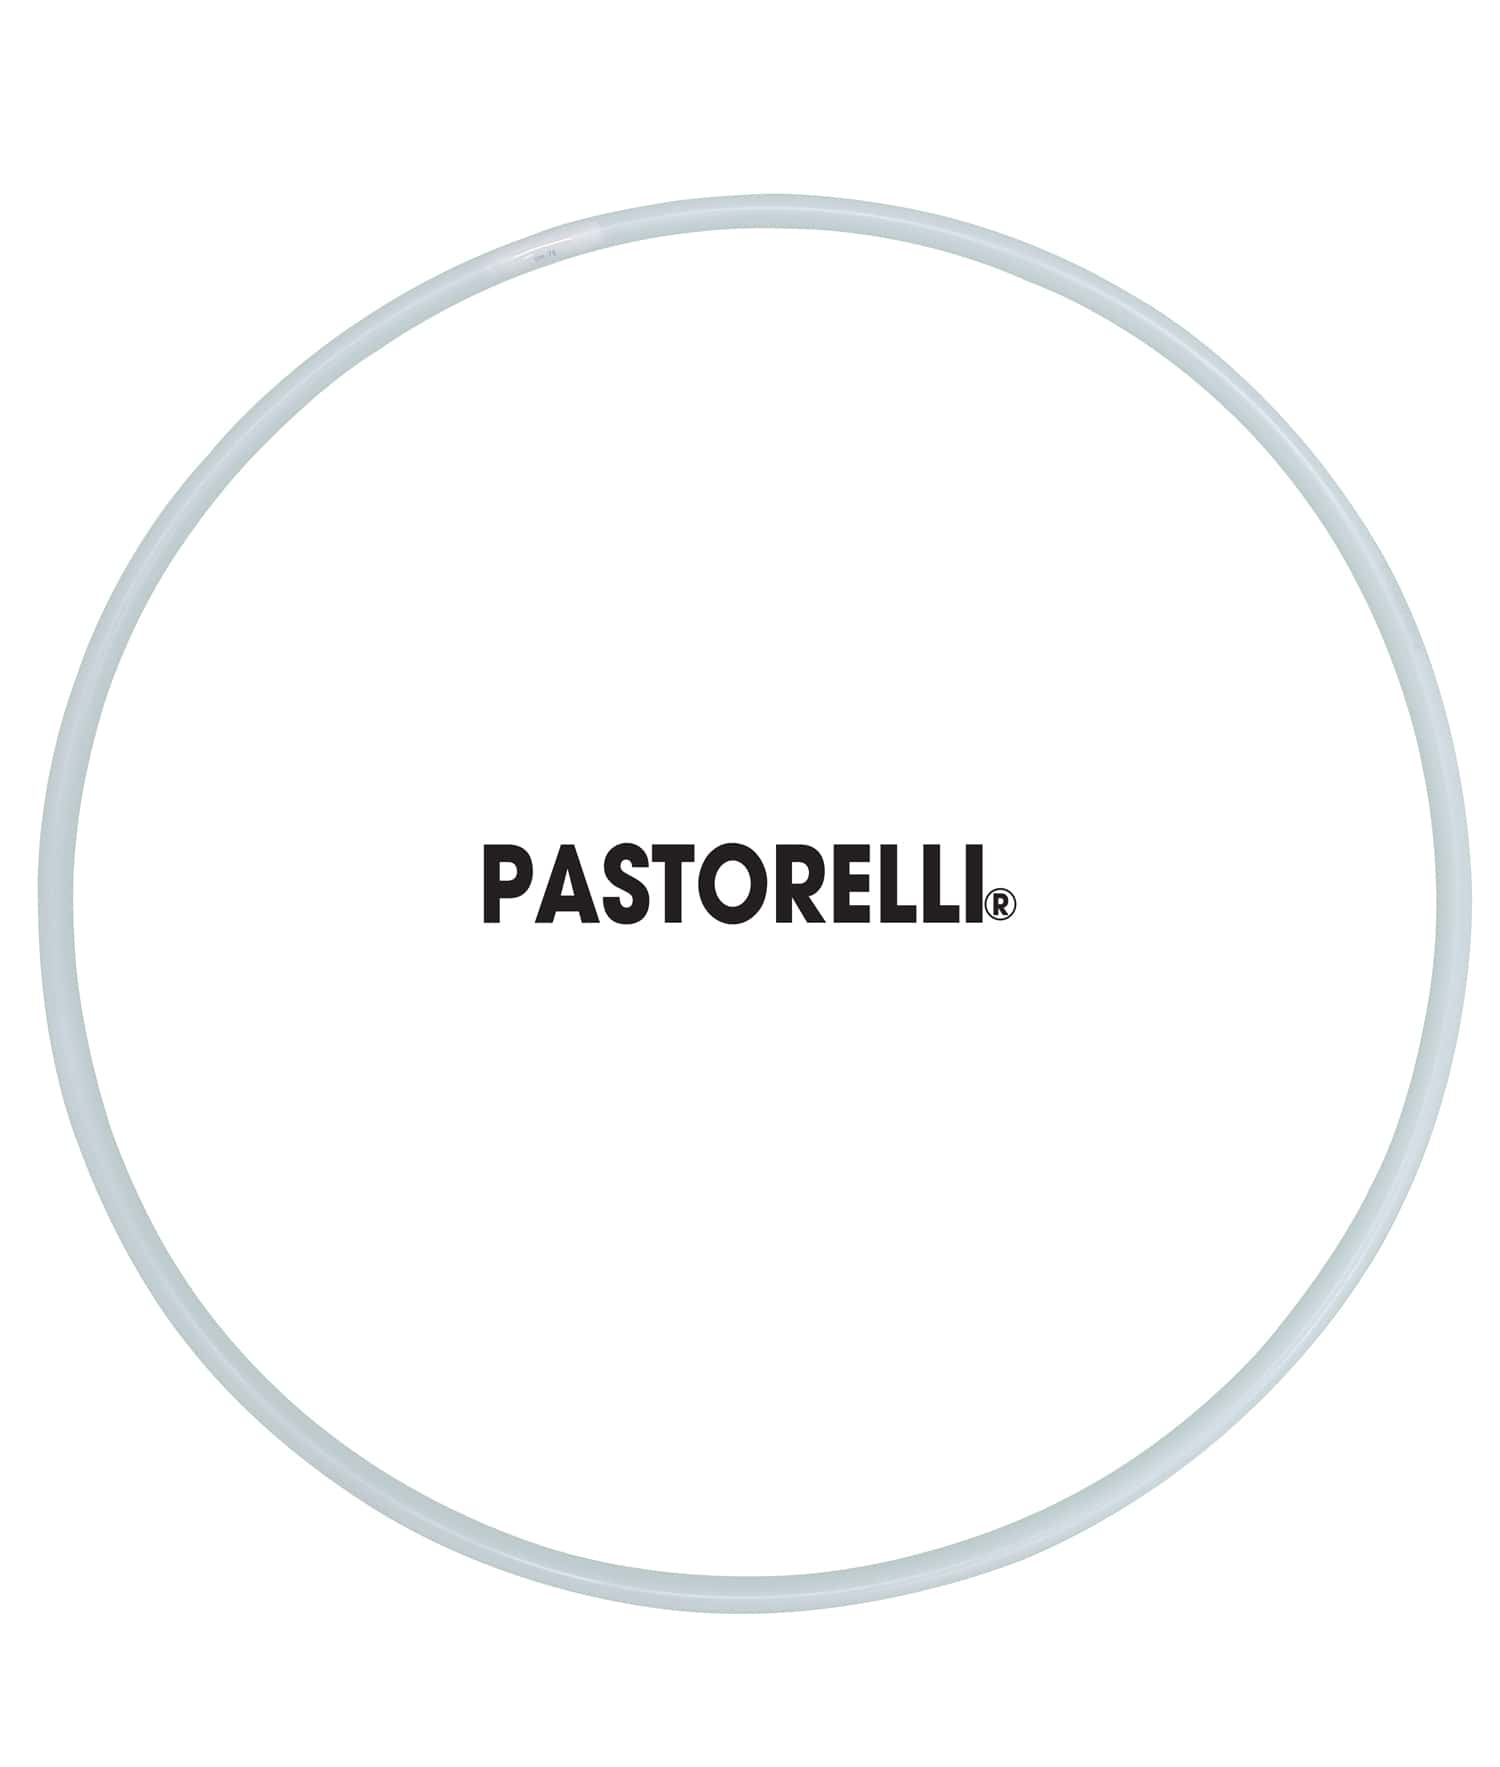 PASTORELLI - Pastorelli Rodeo Rhythmic Gymnastics Hoop